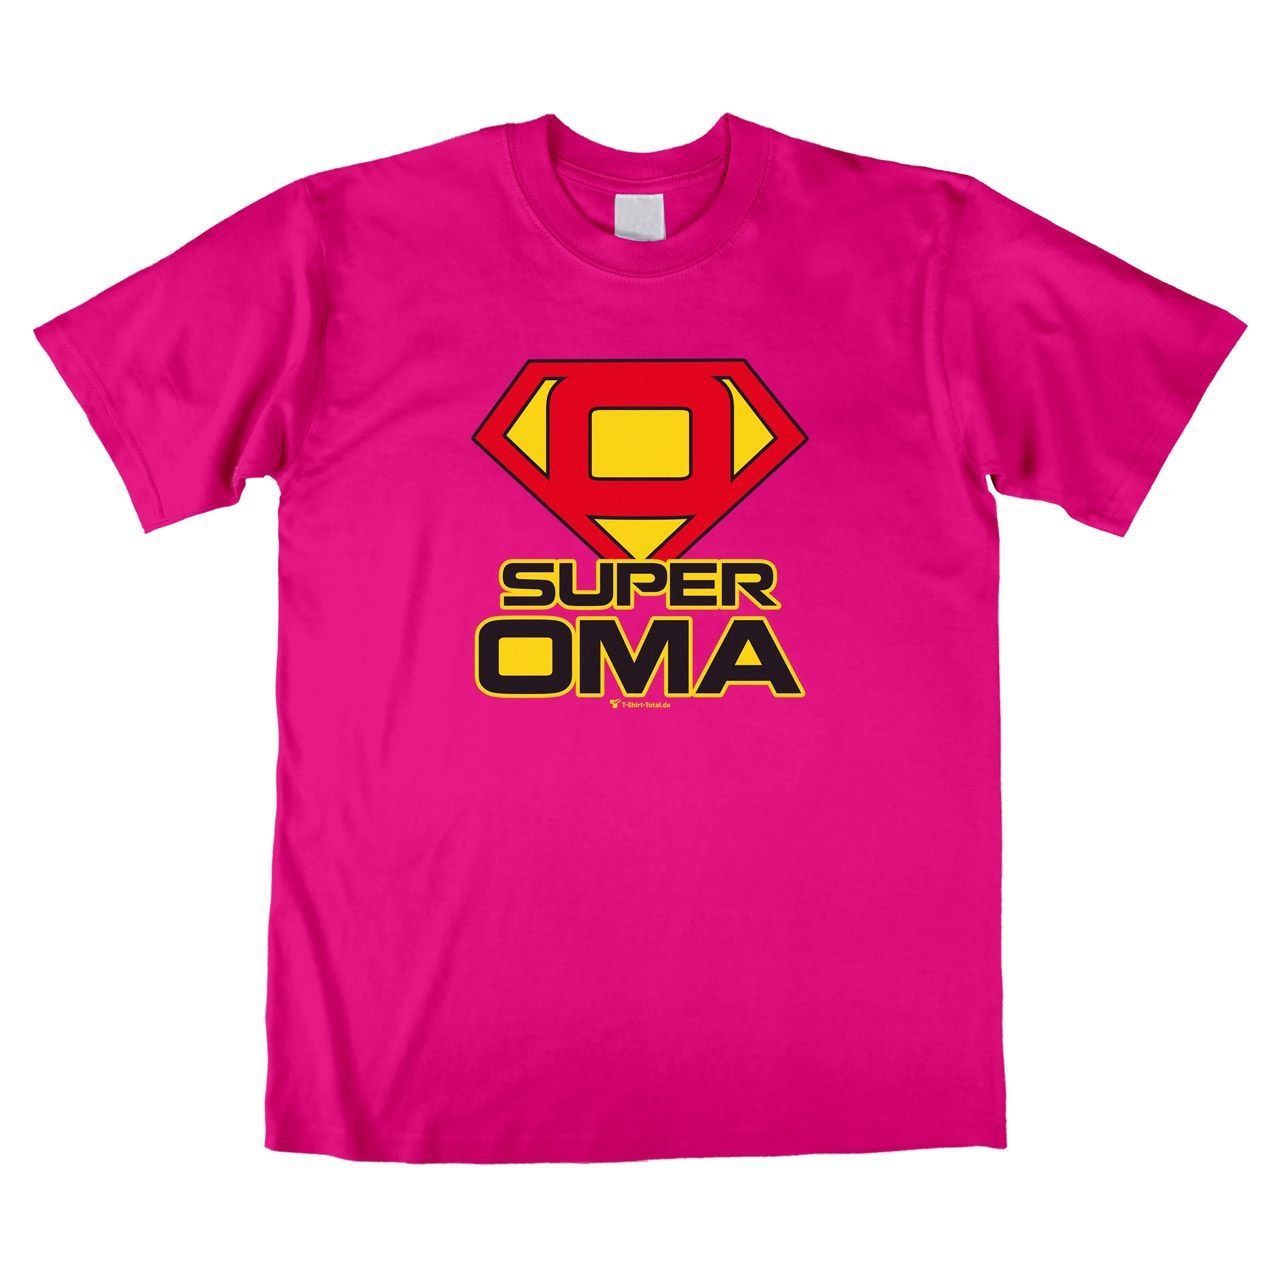 Super Oma Unisex T-Shirt pink Medium